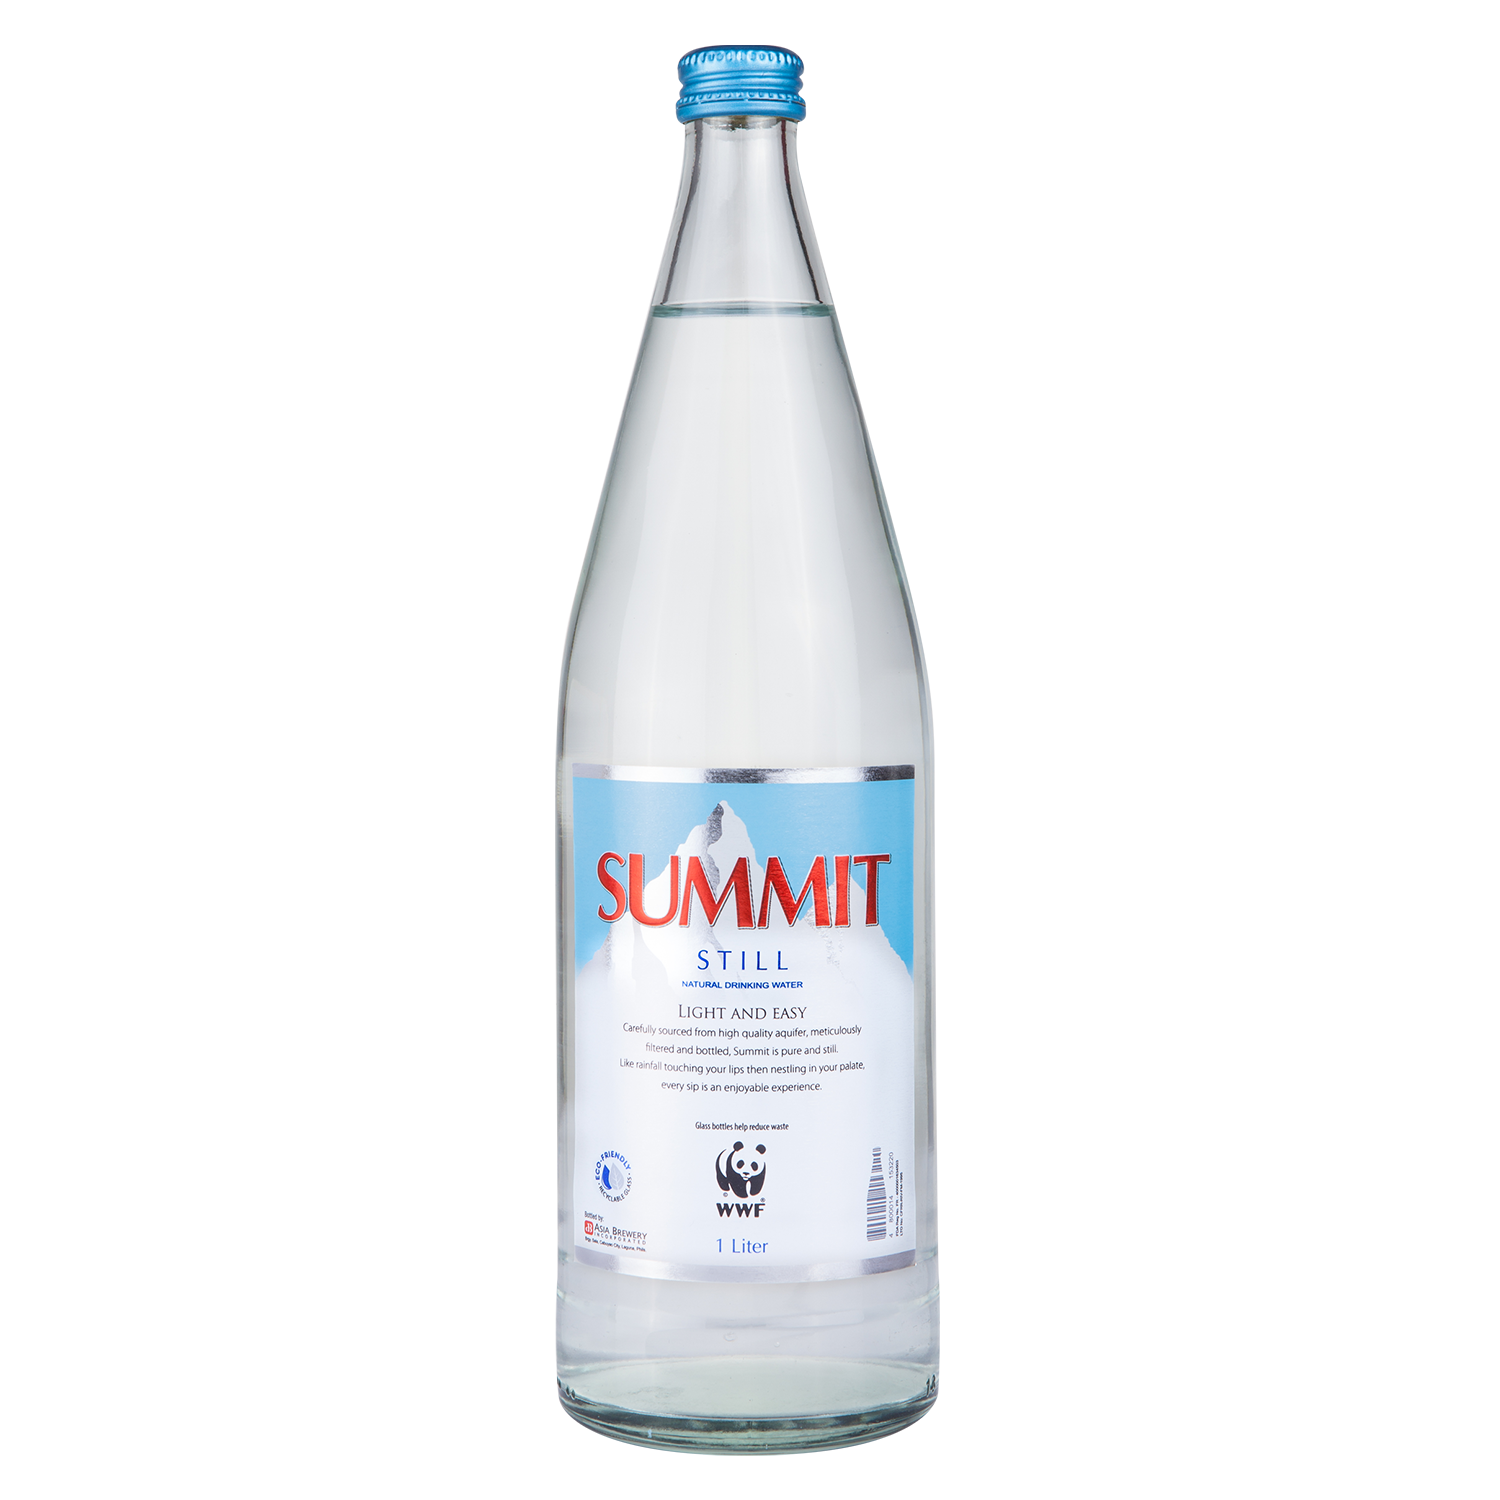 Summit Natural Drinking Water (350ml x 35 bottles)